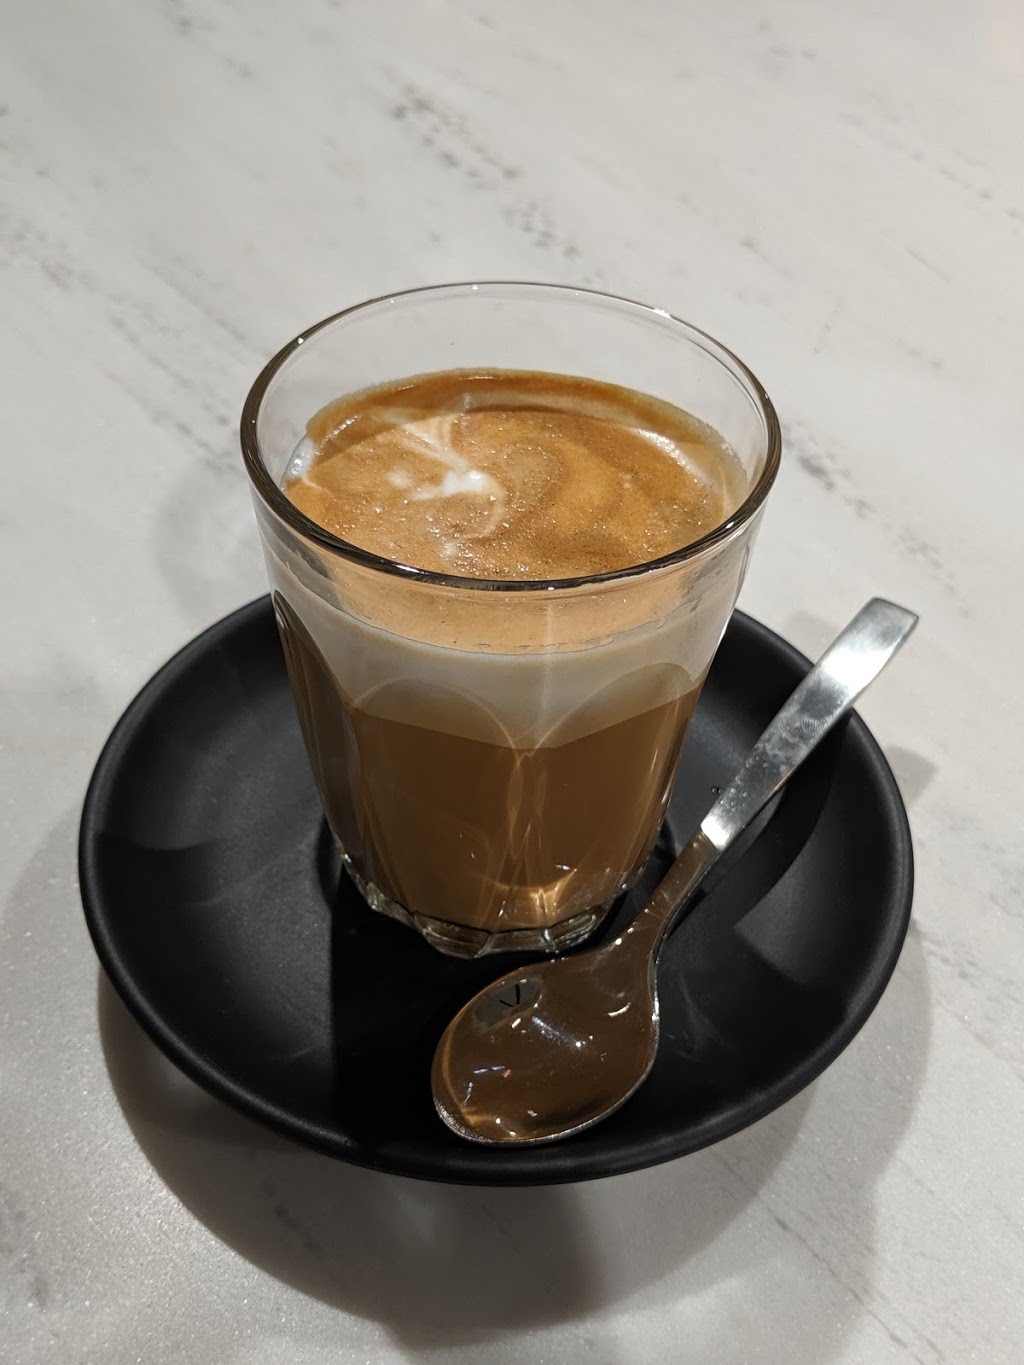 Rex Espresso | cafe | 90-106 Sydney Rd, Brunswick VIC 3056, Australia | 0398133302 OR +61 3 9813 3302